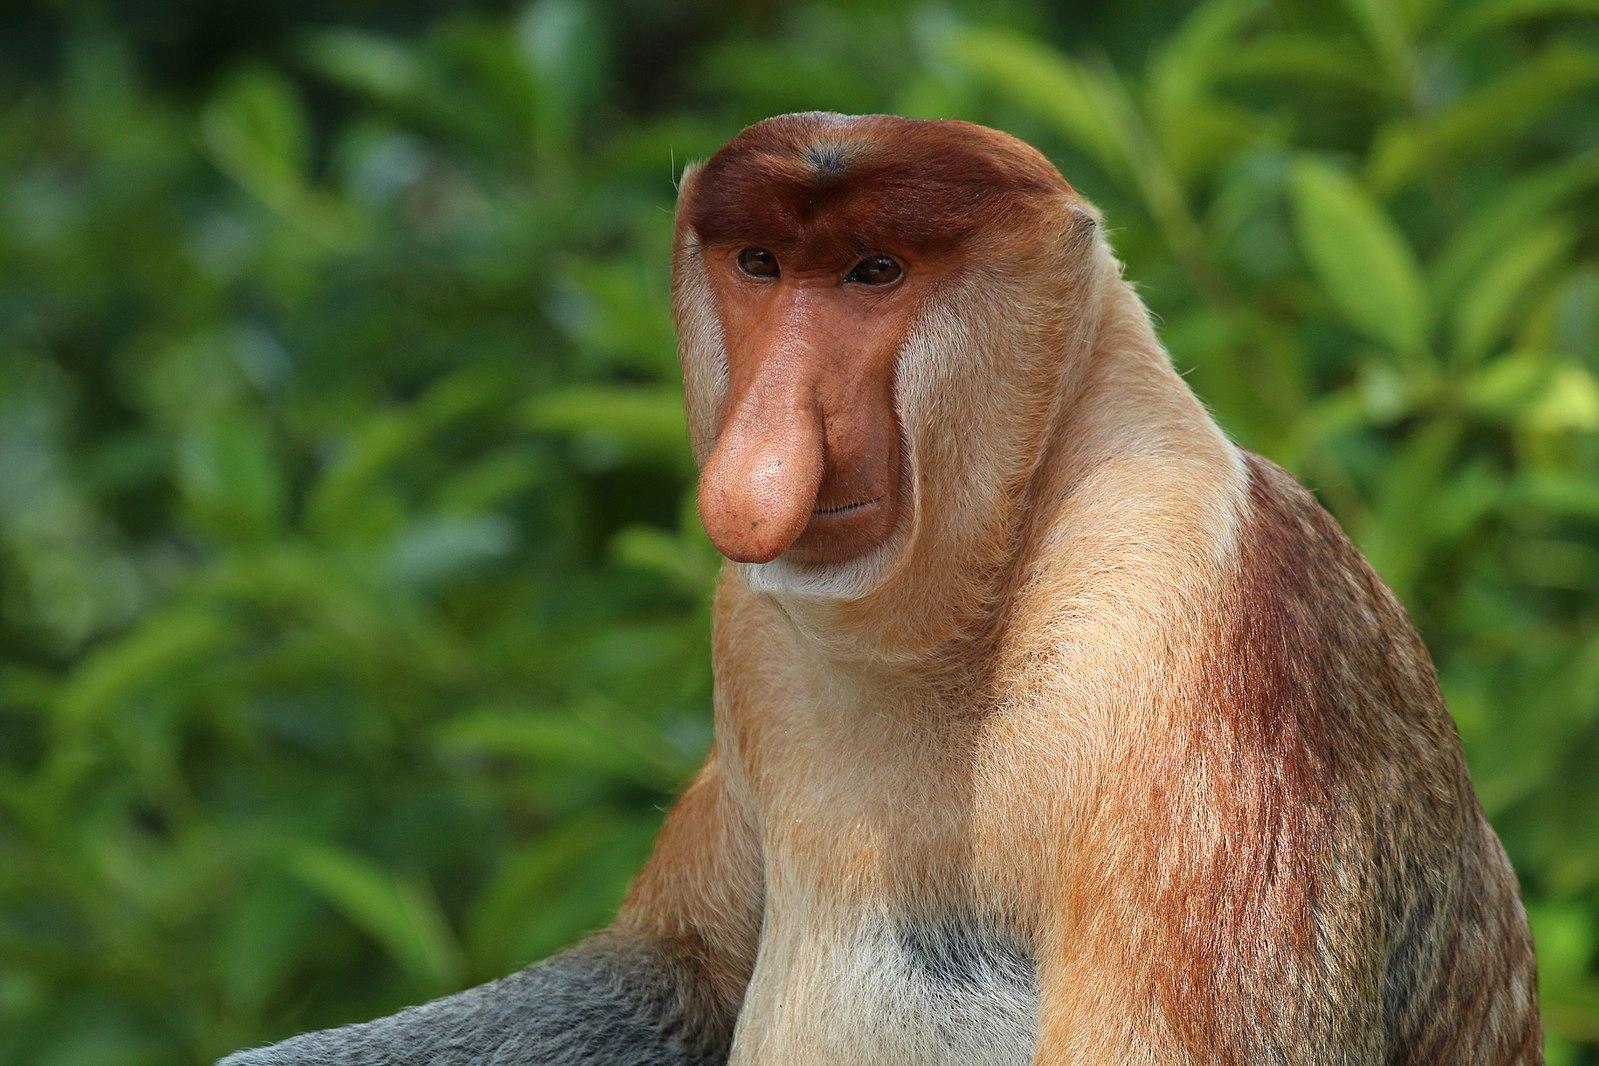 Proboscis monkeys are one of several “odd-nosed” leaf monkeys.